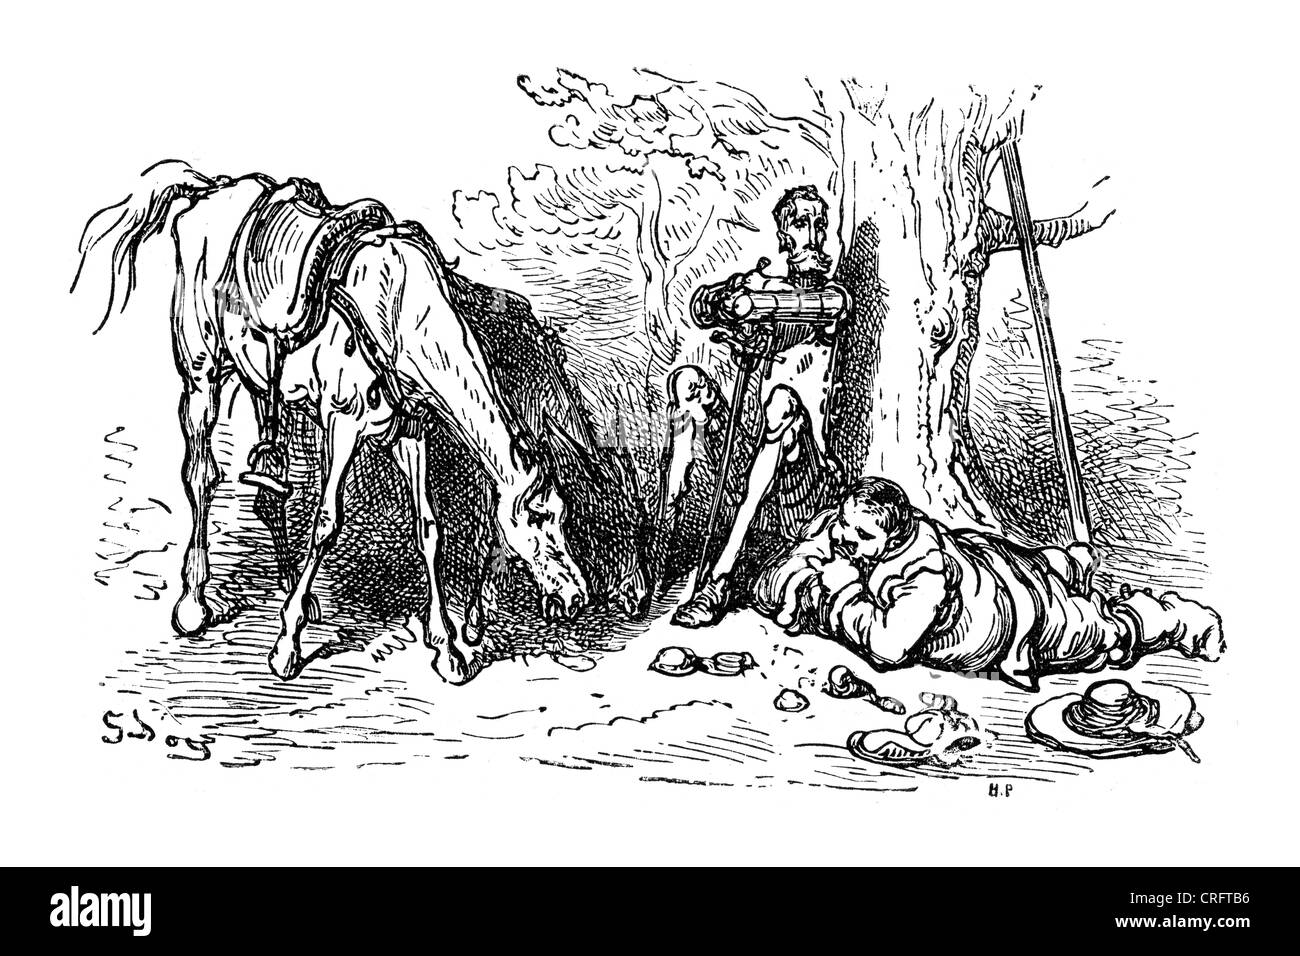 Don Quixote and Sancho Panzat. Illustration by Gustave Dore from Don Quixote. Stock Photo